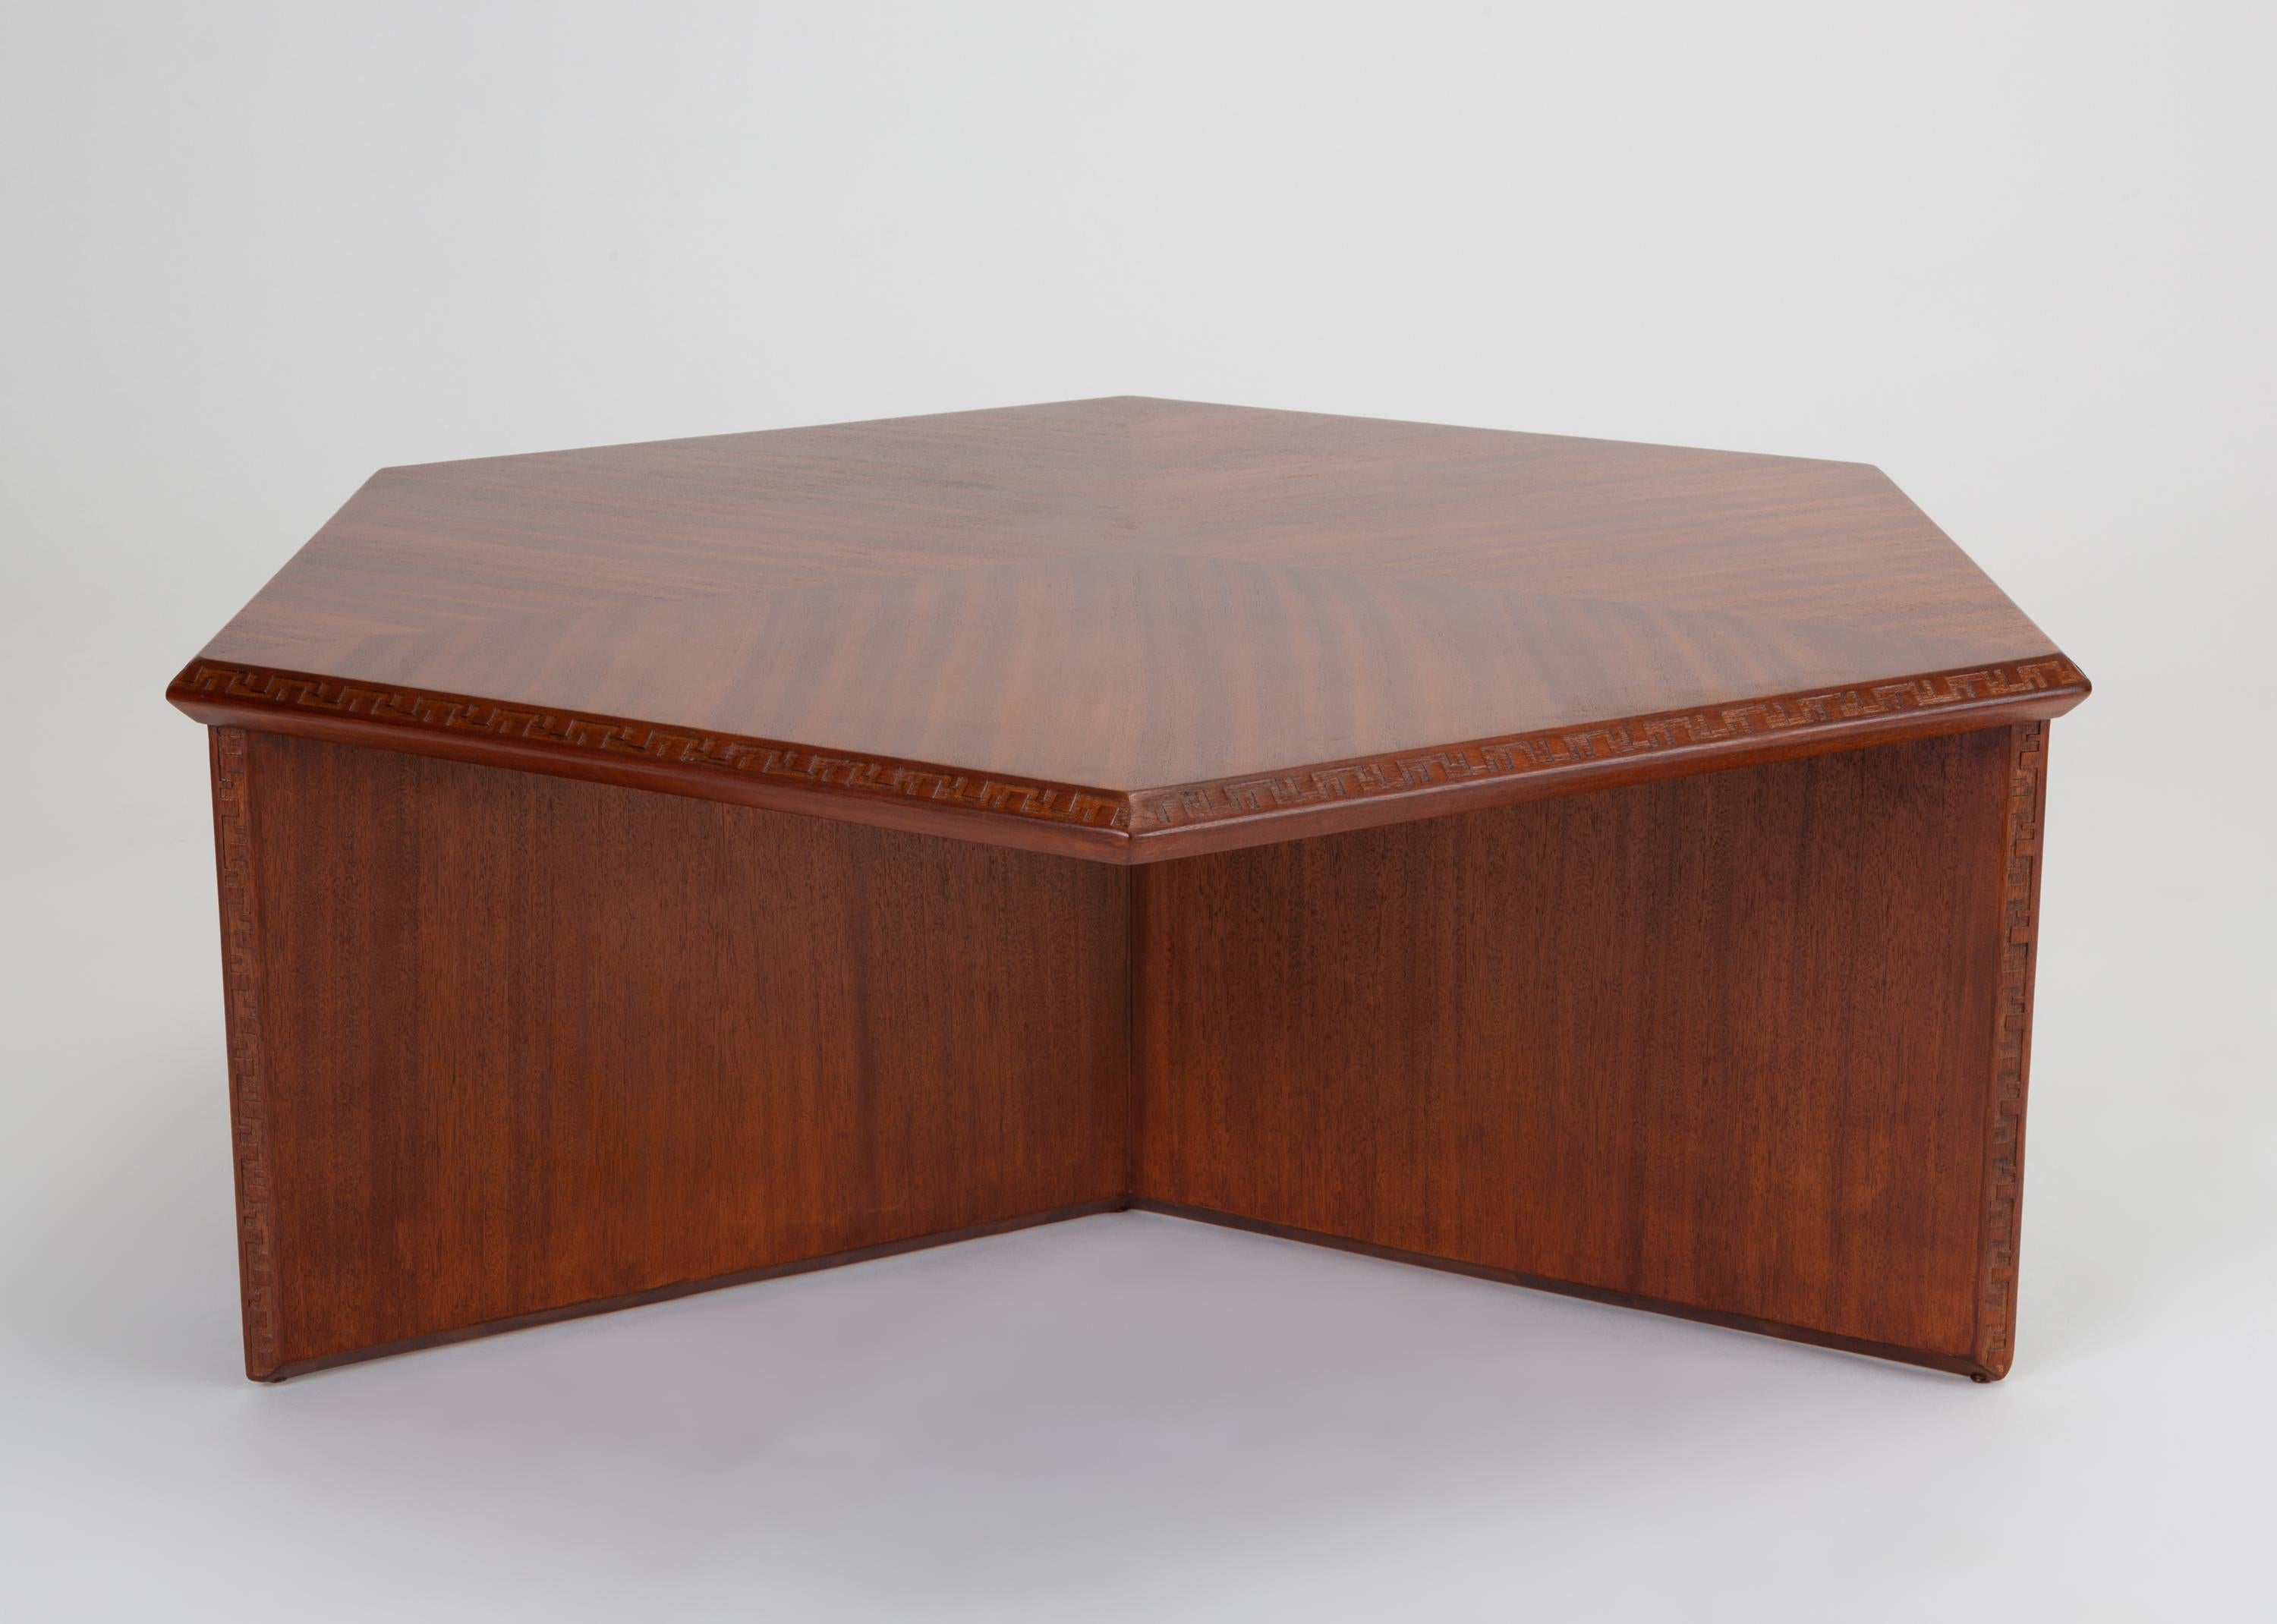 Frank Lloyd Wright “Taliesin” Coffee Table for Heritage-Henredon 2